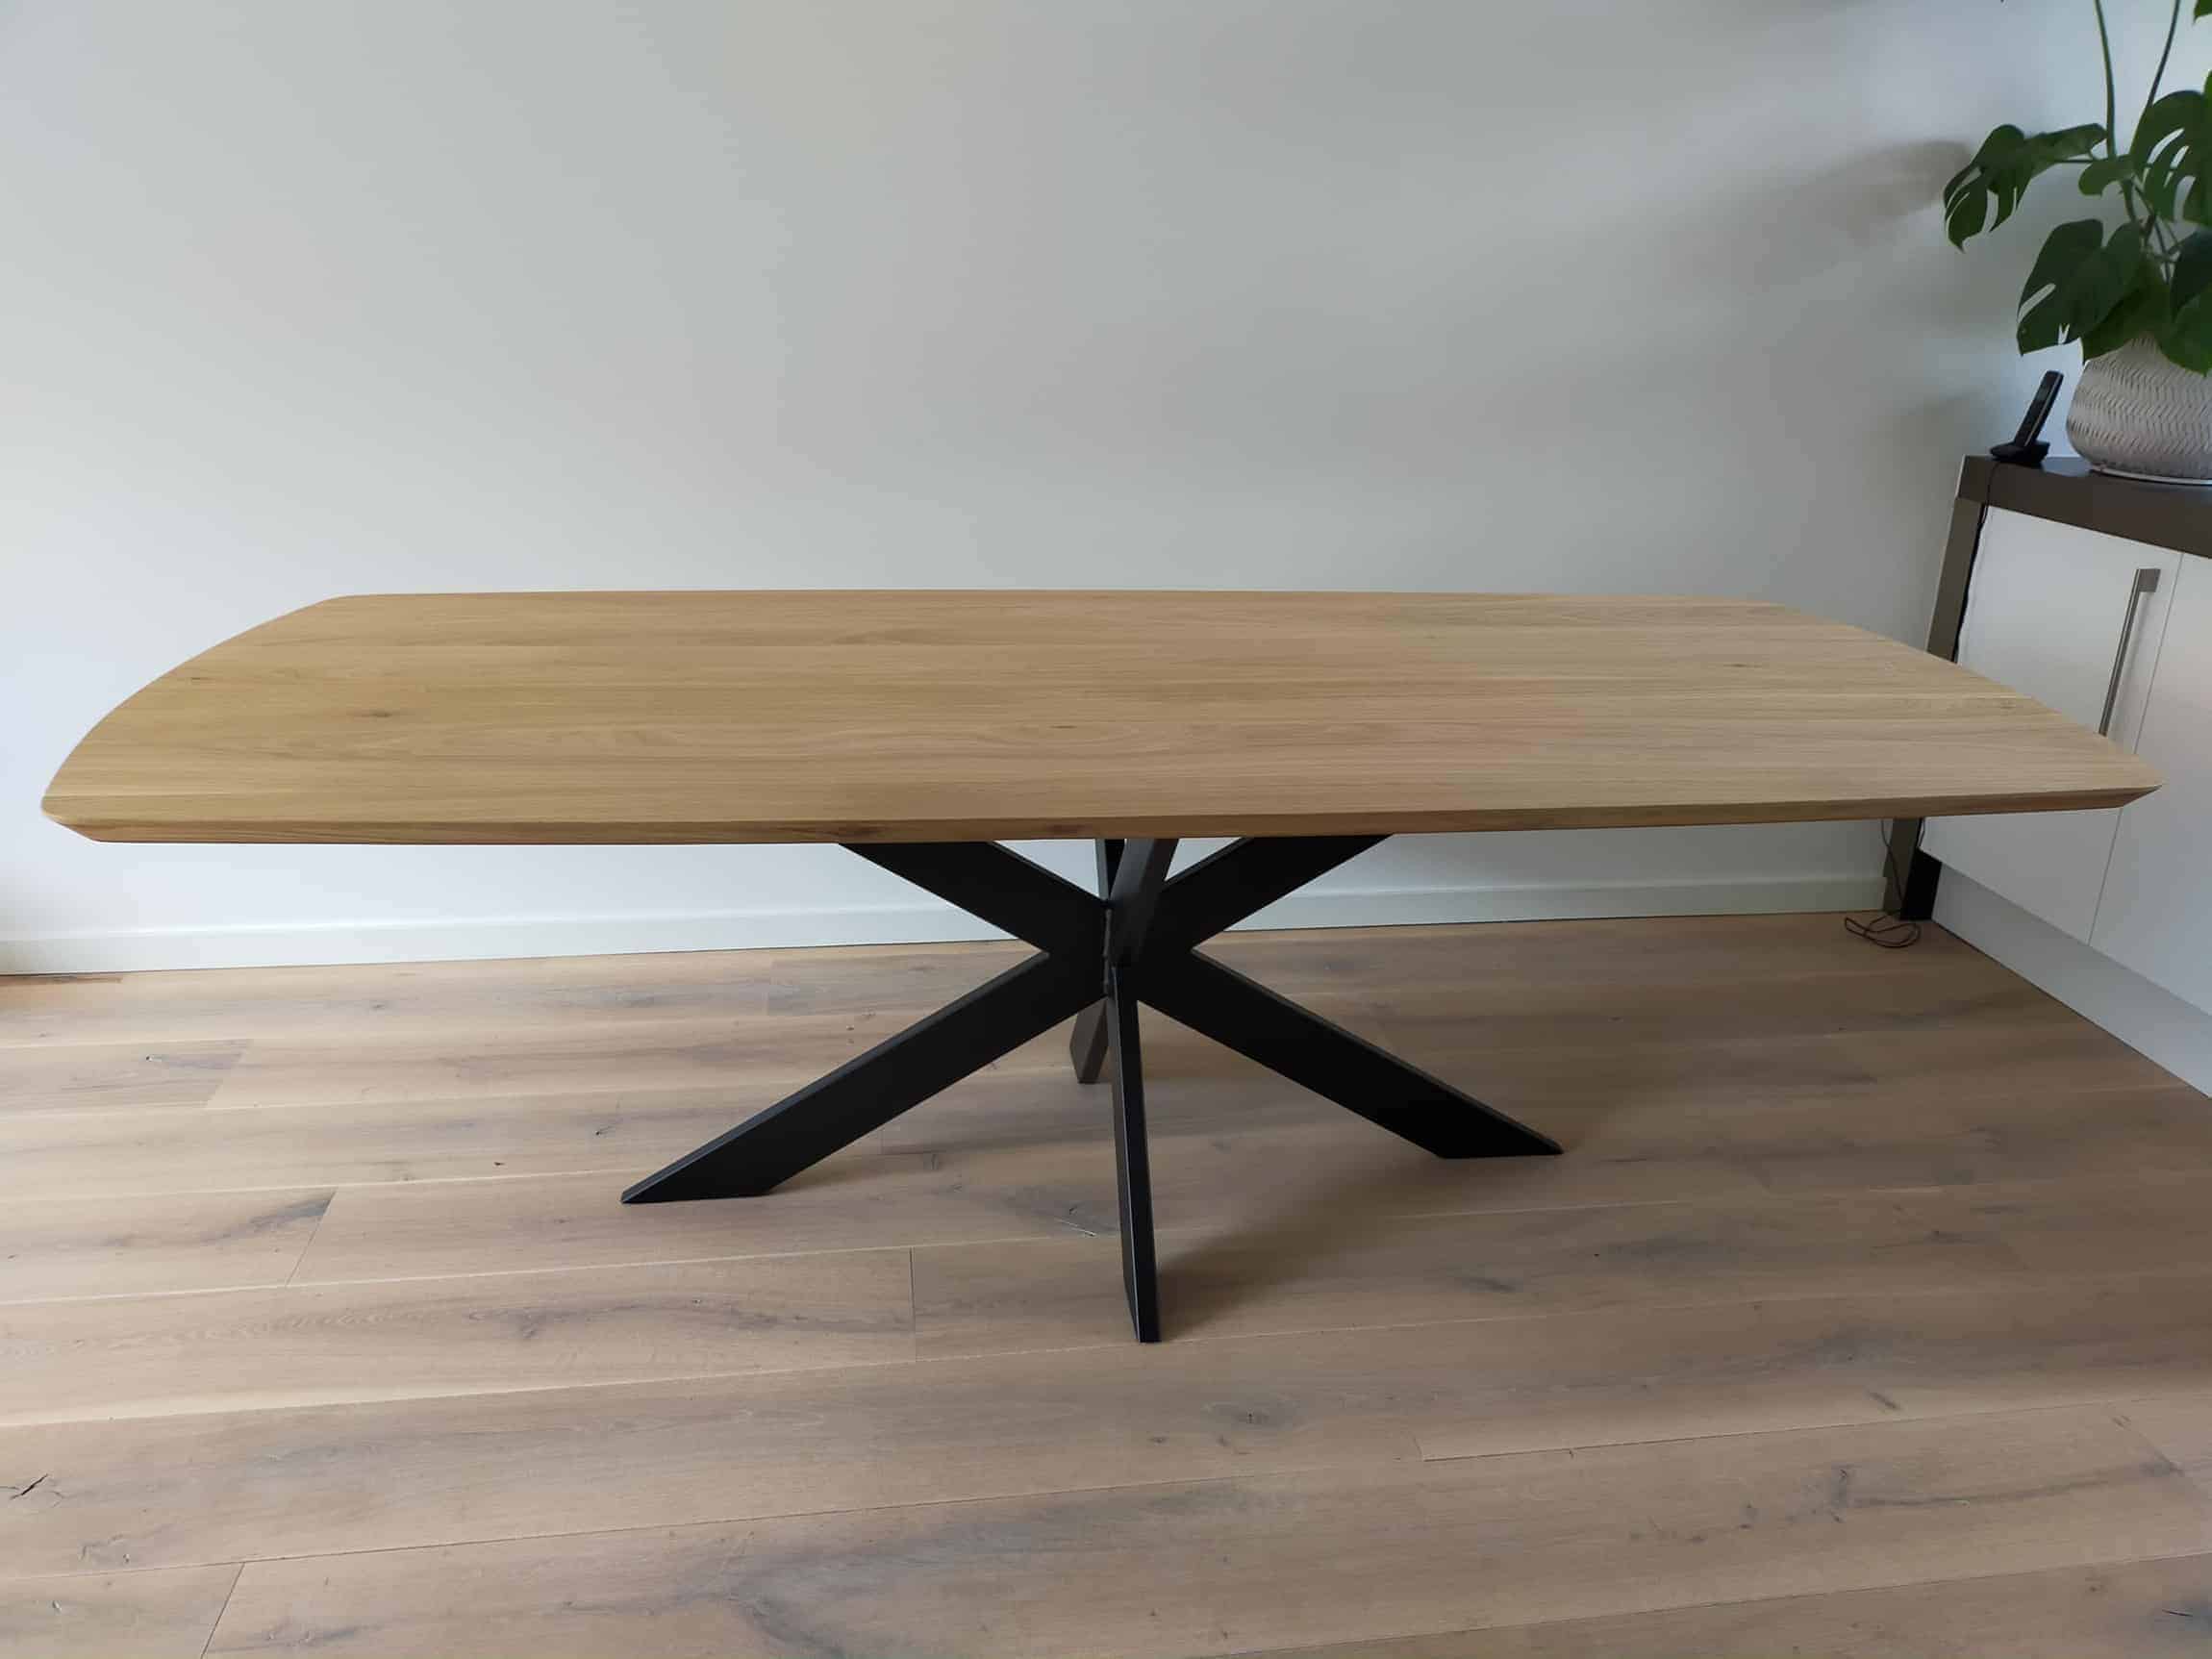 Deens ovale tafel met stalen matrix onderstel (koker10x3cm) zwart. Afwerking ultra matte lak.